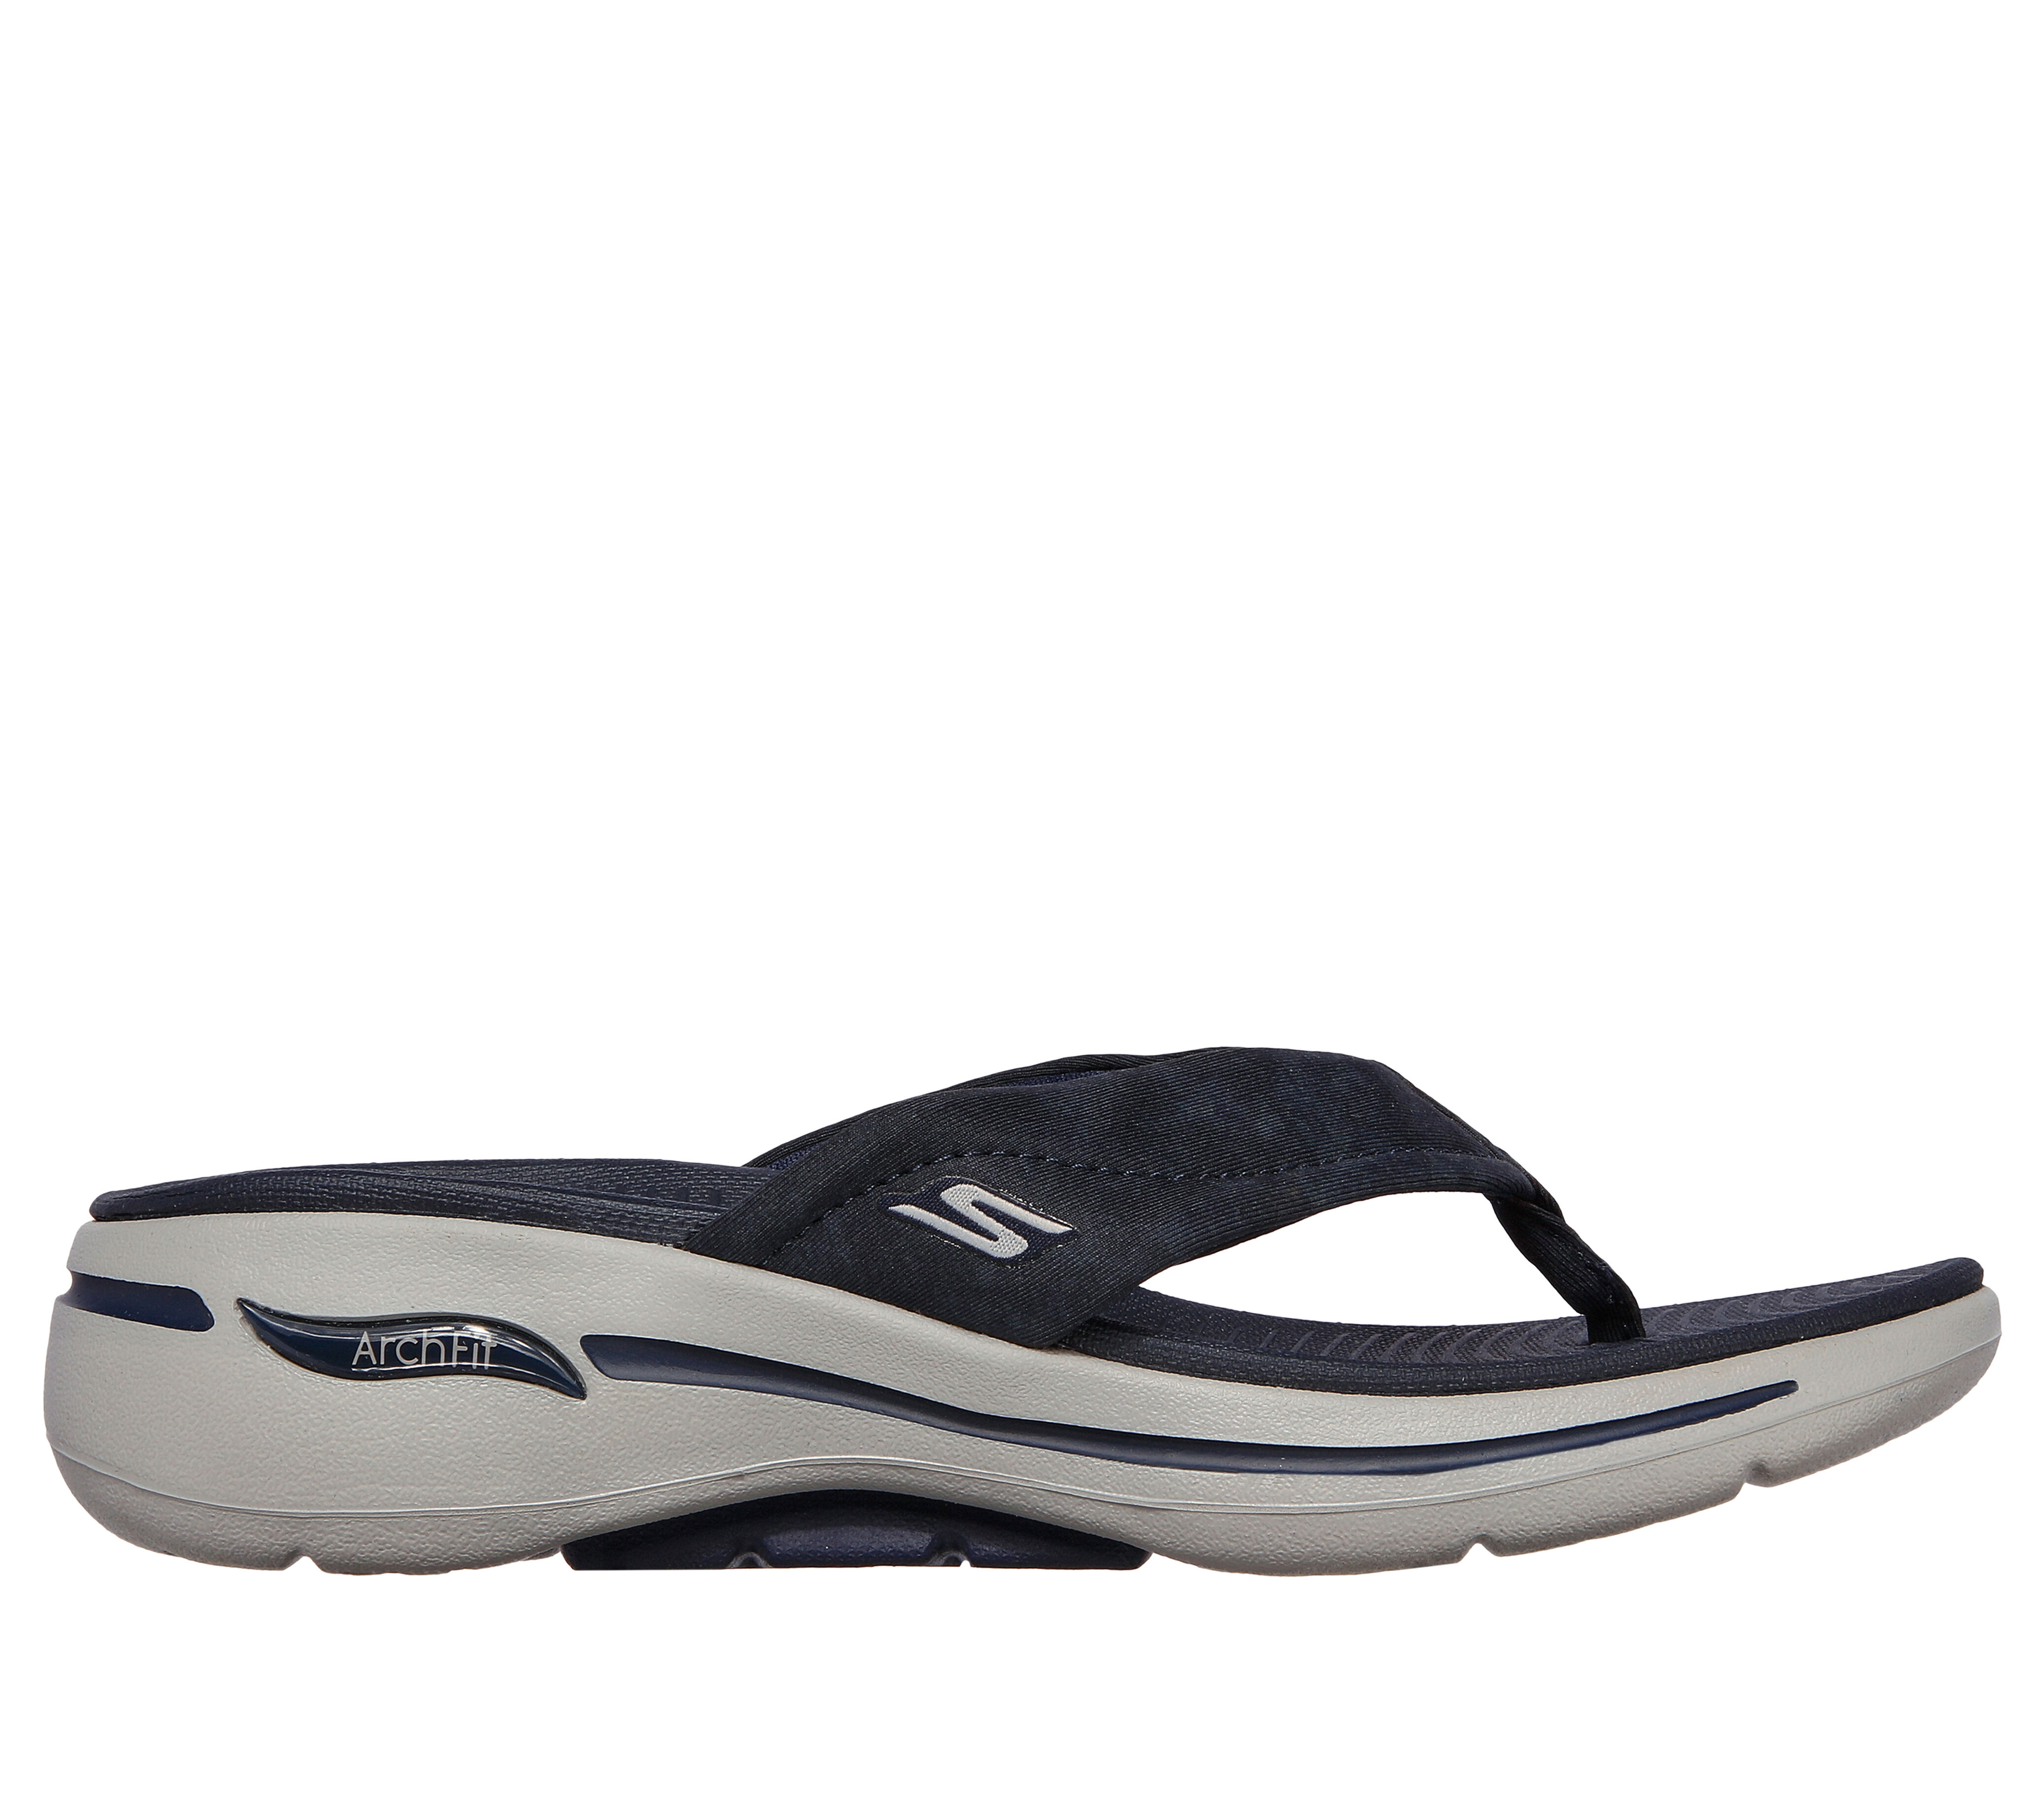 skechers sandals size 12